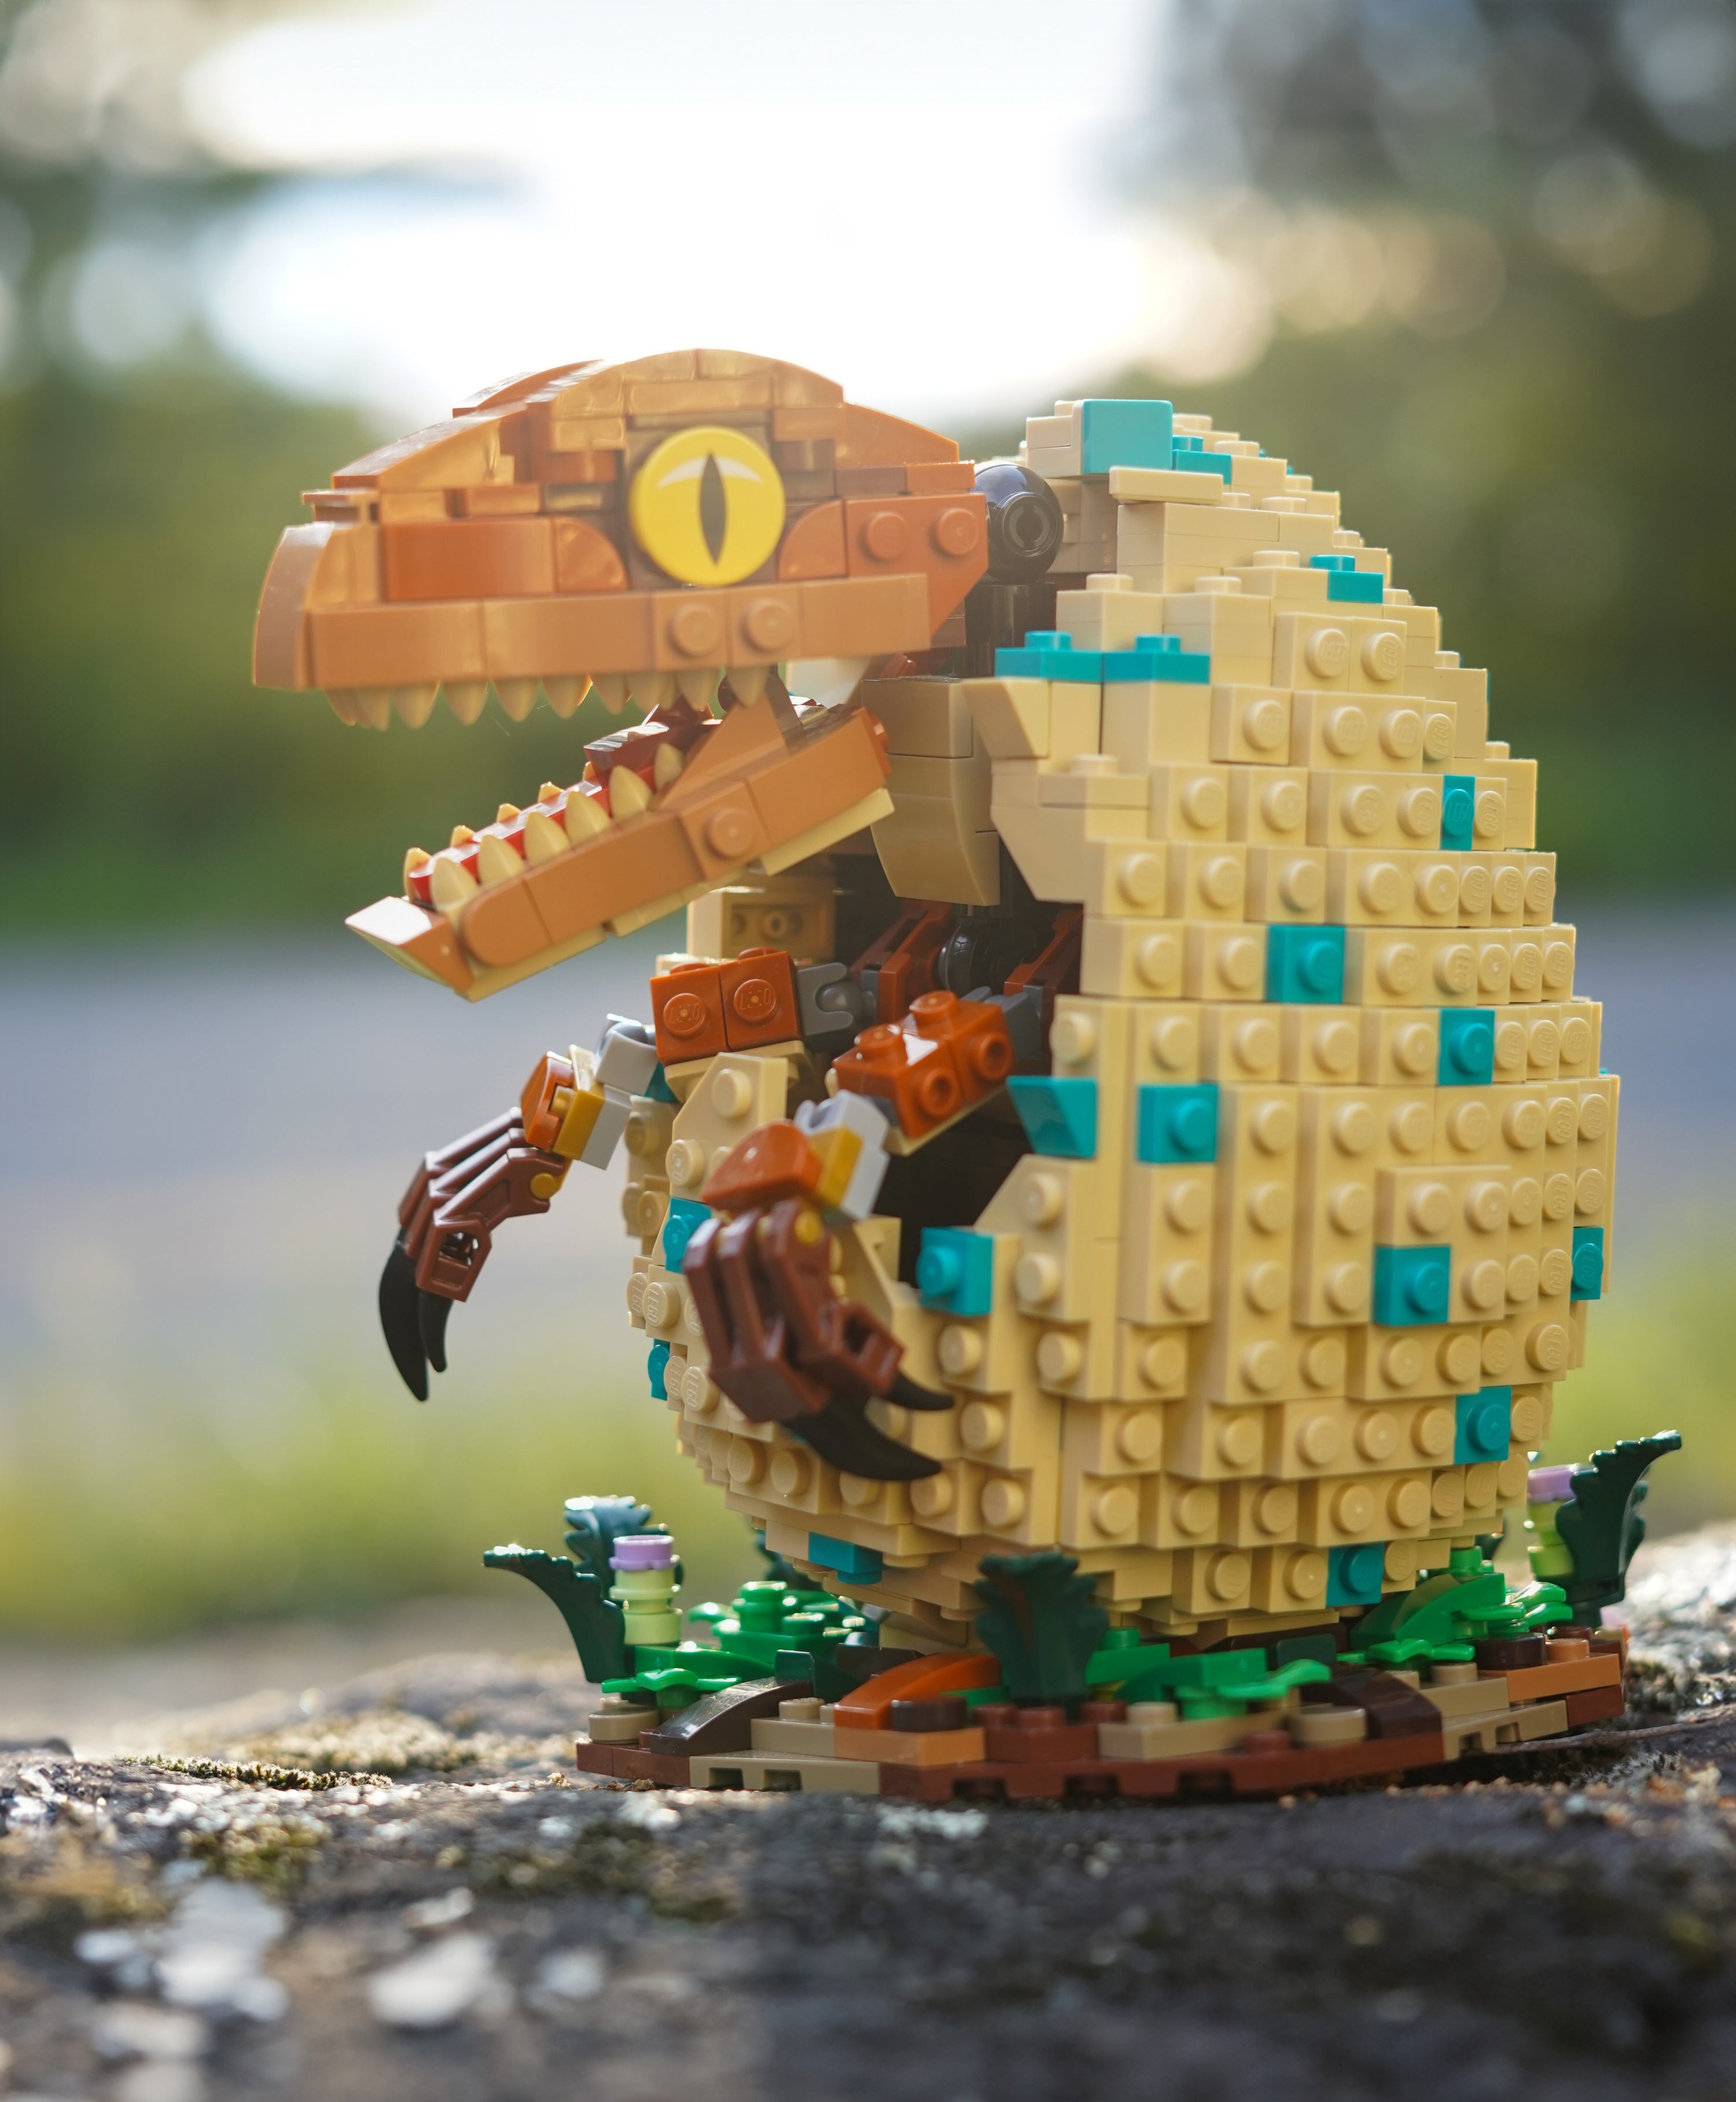 Raptor Dino Egg Built with LEGO Bricks by Bricker Builds on Stone